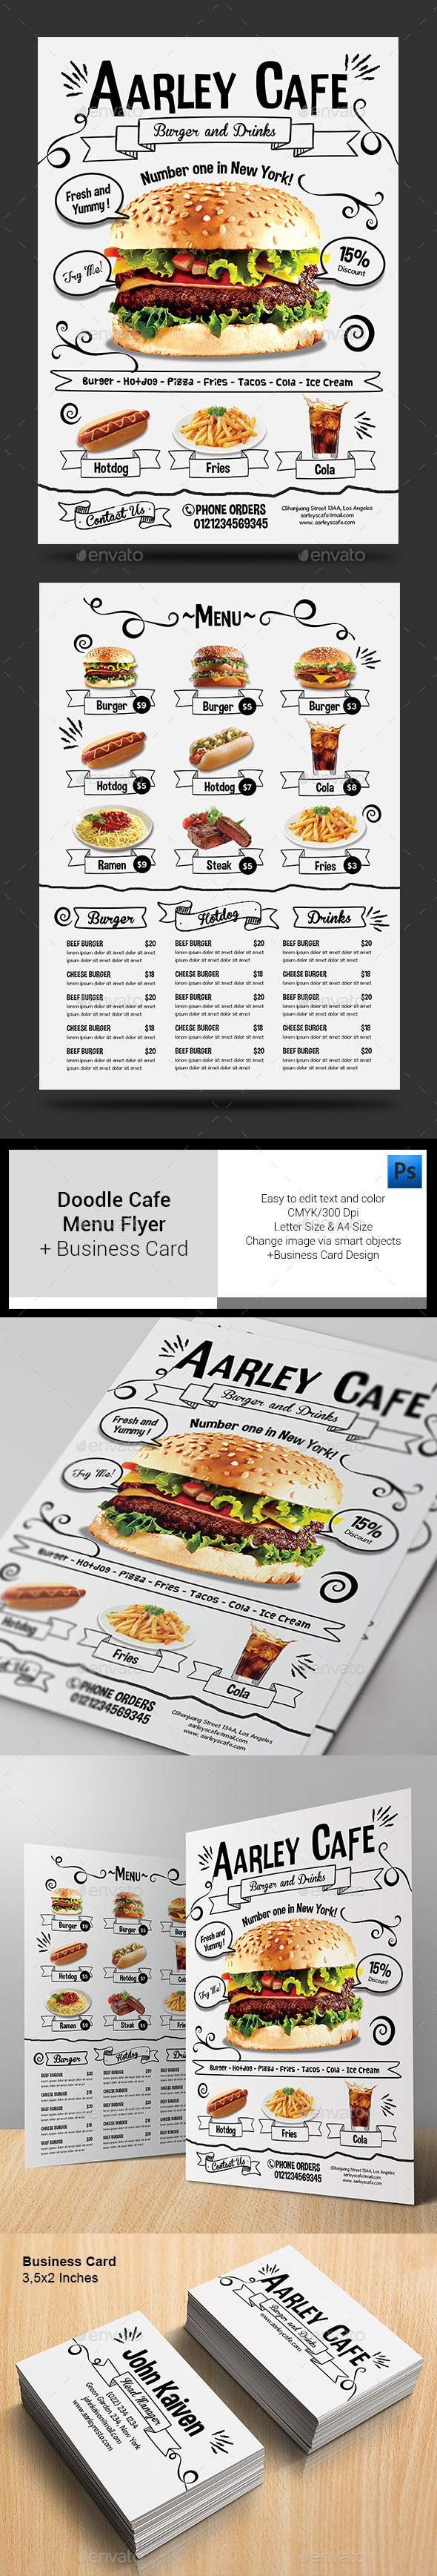 Doodle Cafe Menu + Business Card